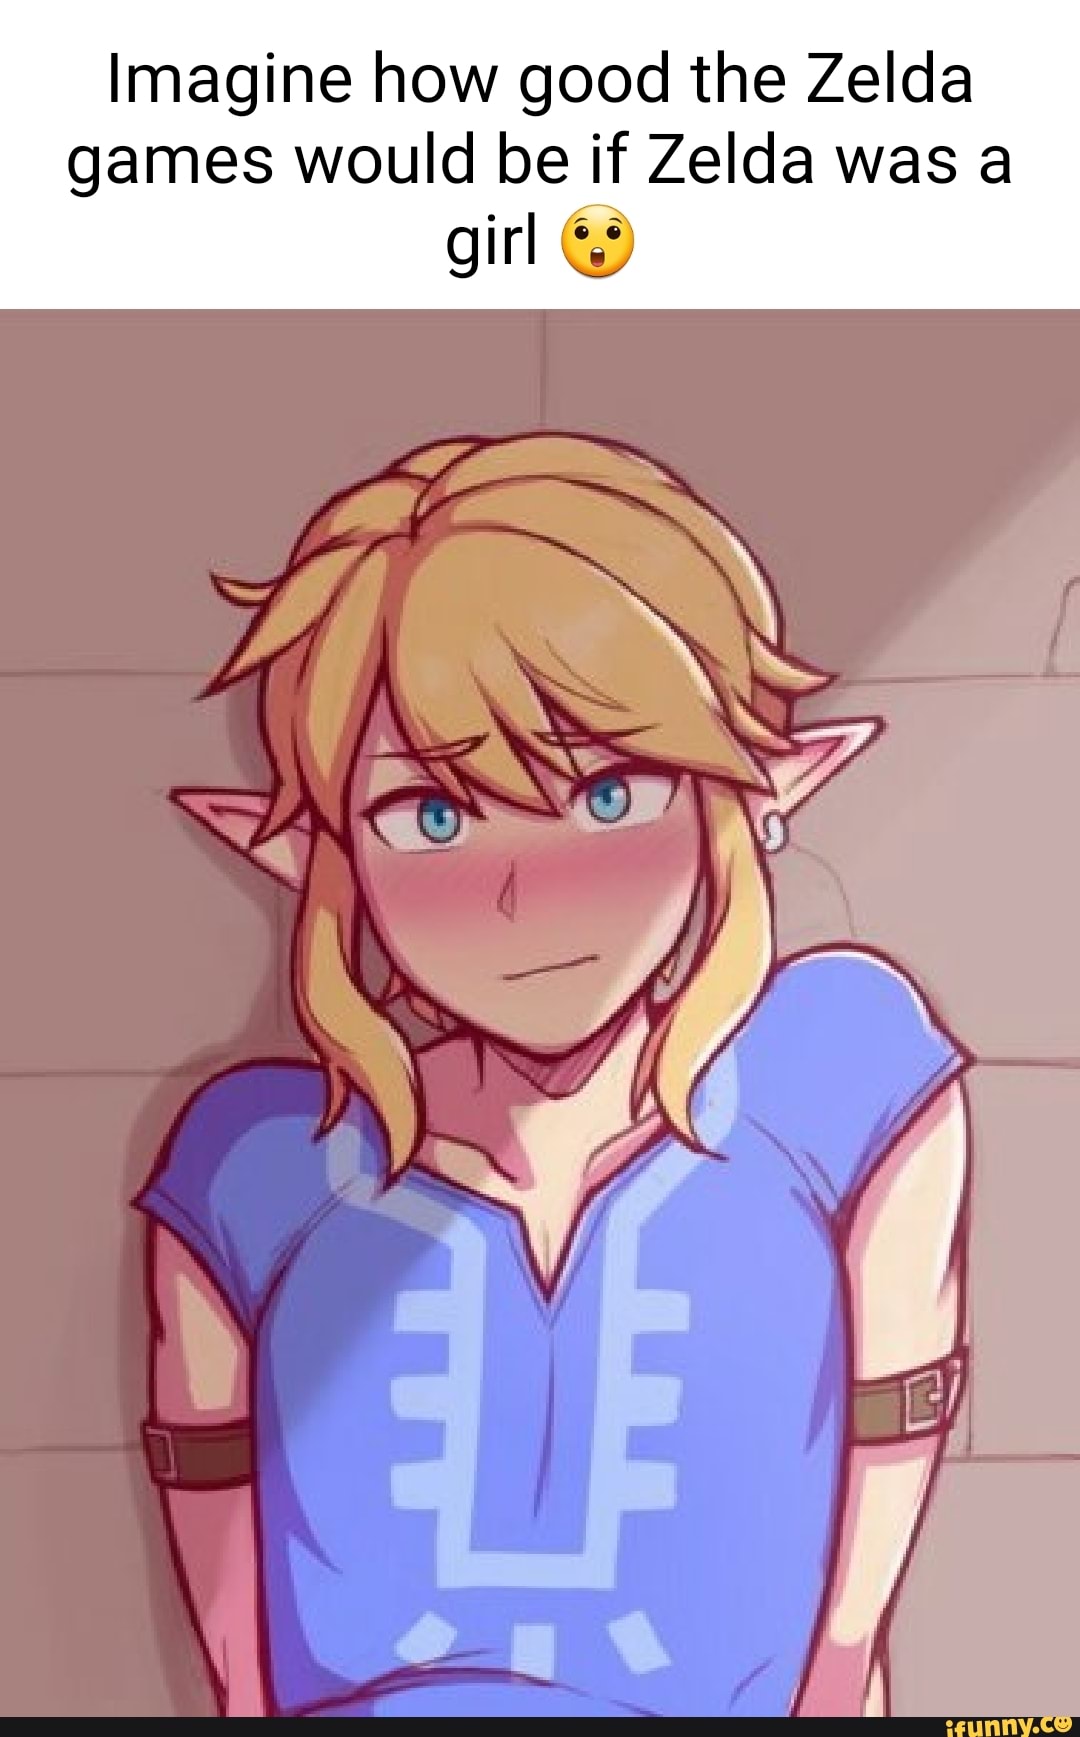 Imagine how good the Zelda games would be if Zelda was a girl 